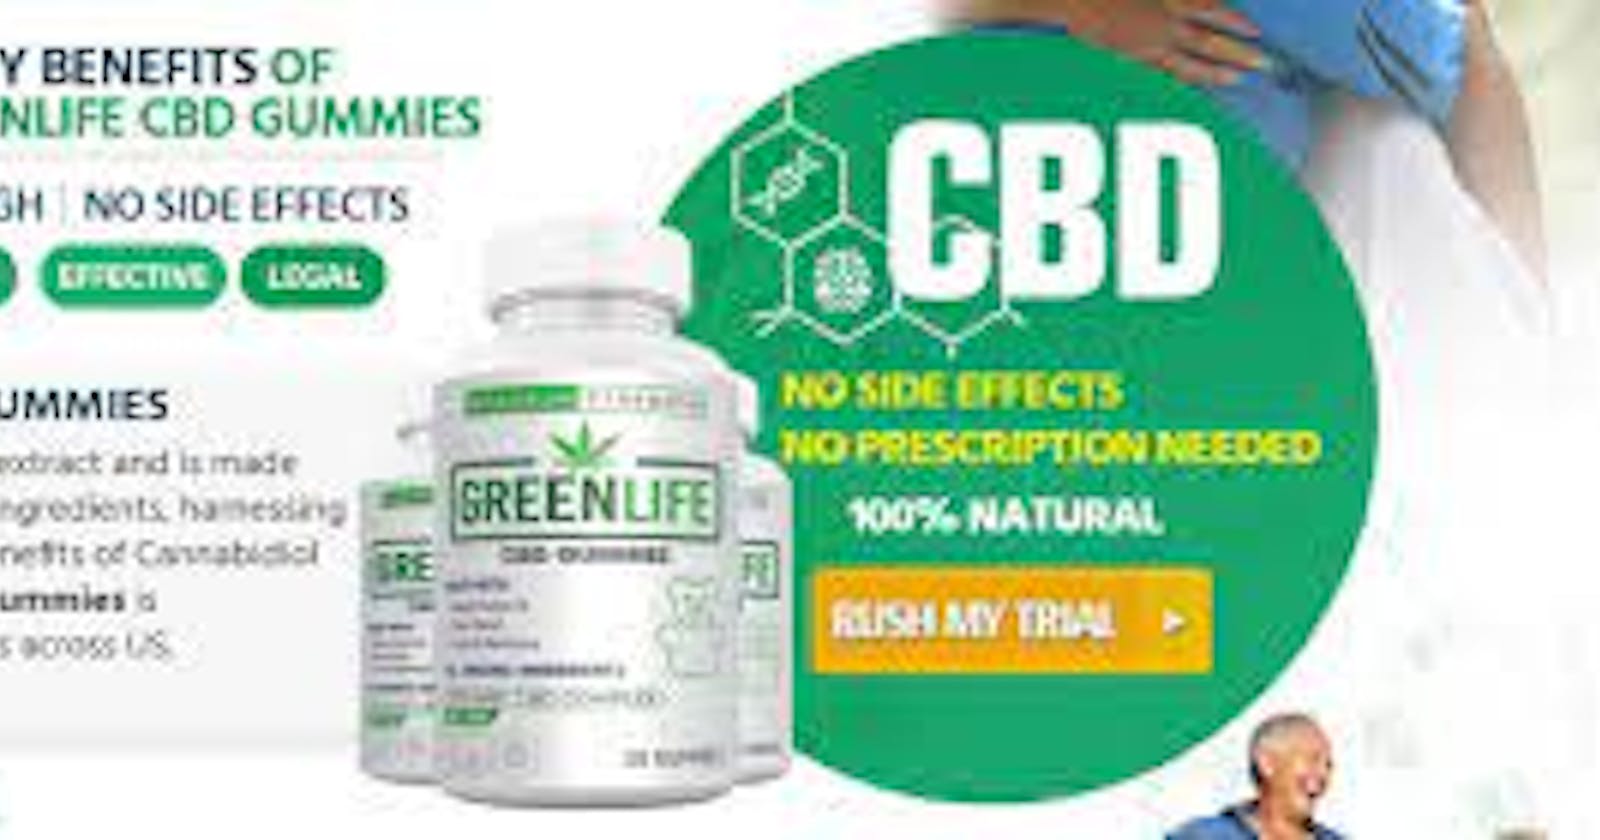 Green Life CBD Gummies 100% Natural